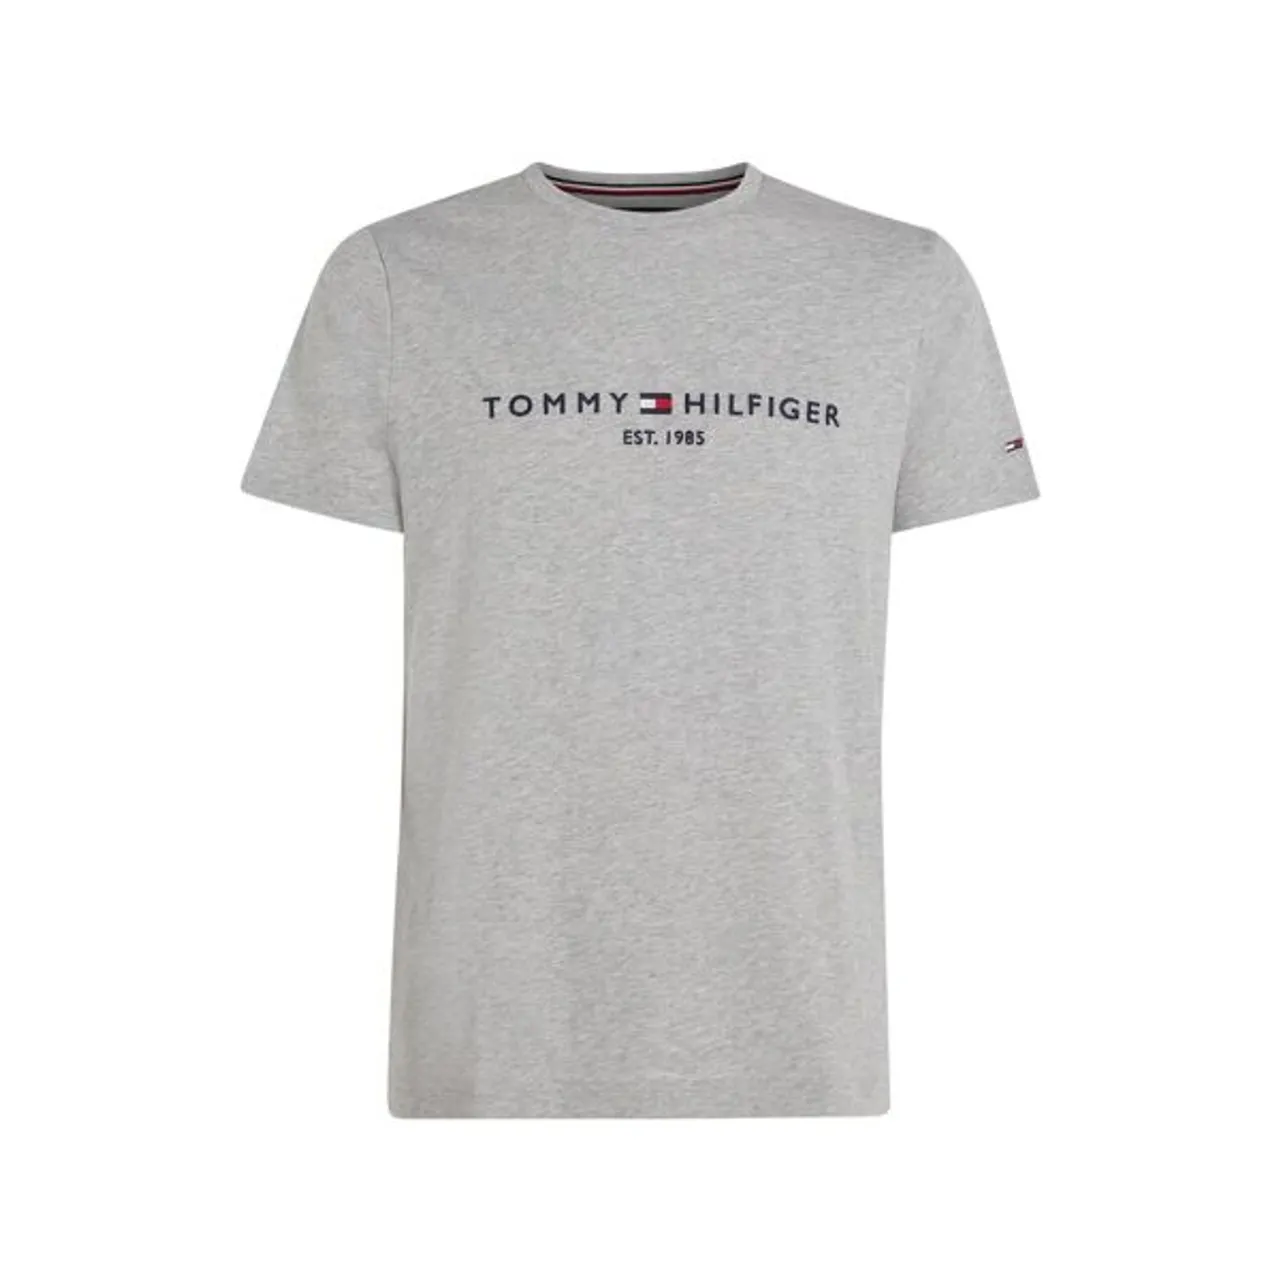 T-Shirt TOMMY HILFIGER "TOMMY FLAG TEE" Gr. S (46), grau (cloud htr) Herren Shirts T-Shirts